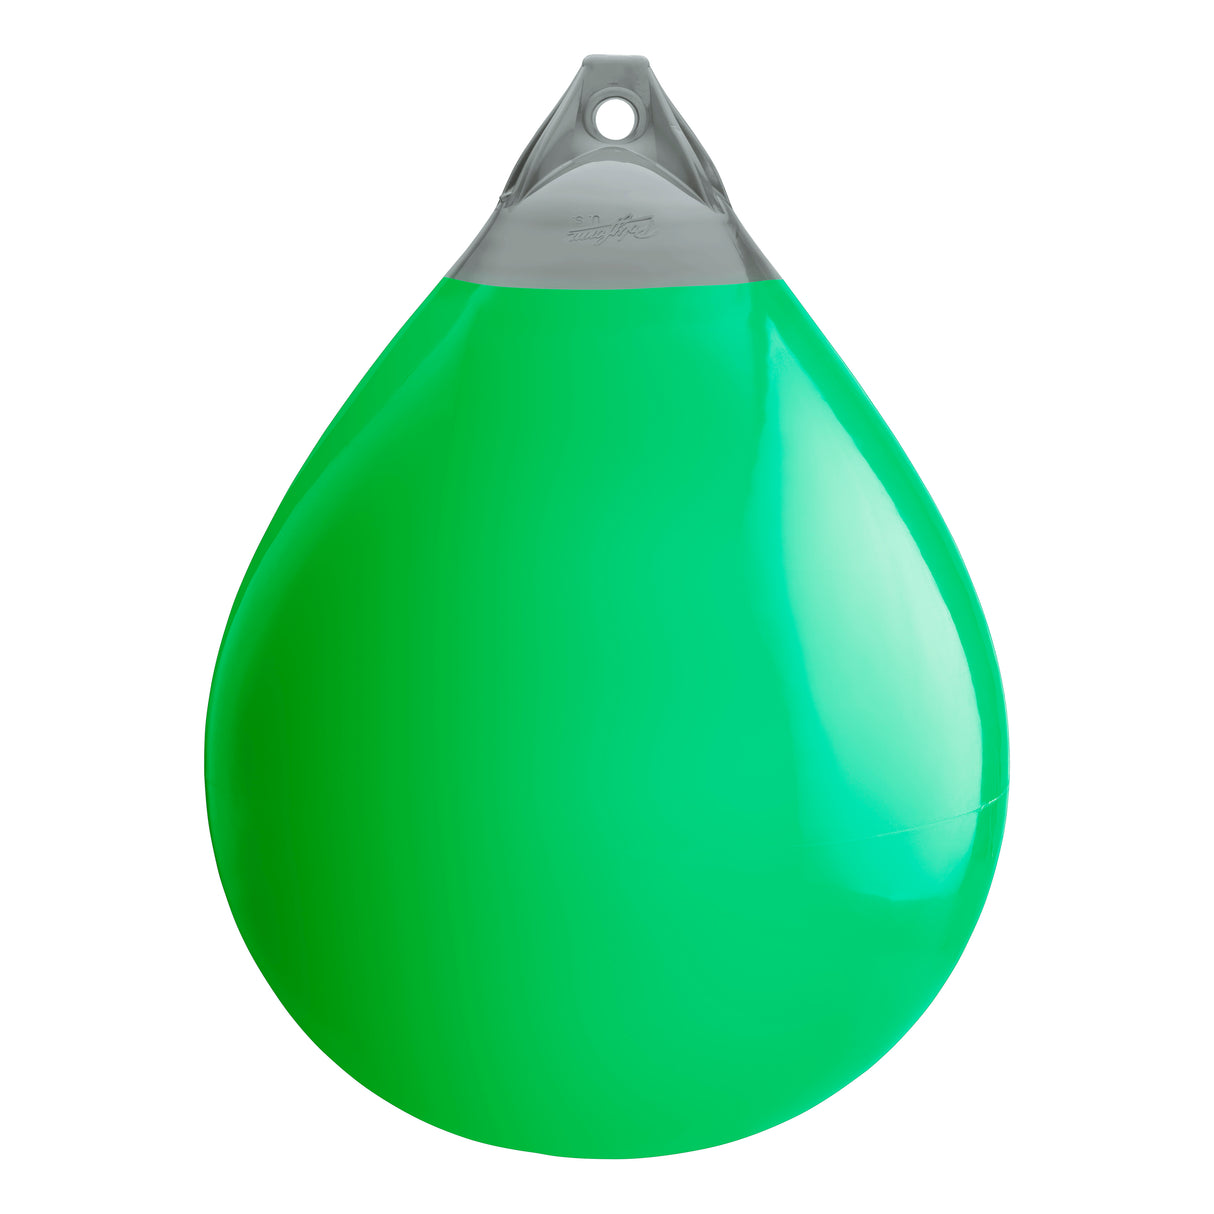 Green buoy with Grey-Top, Polyform A-7